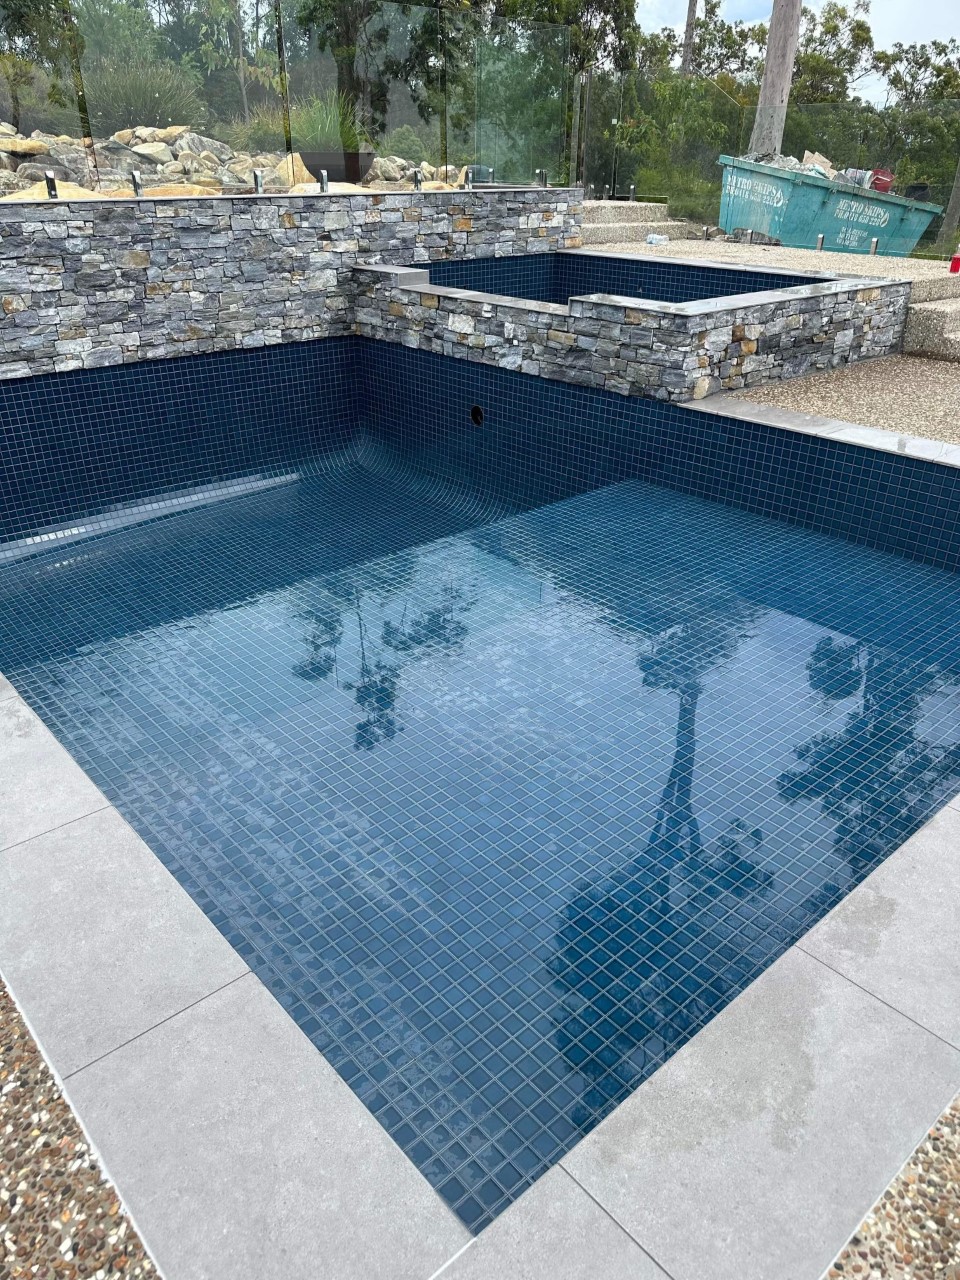 empty pool with shiny dark blue tiles